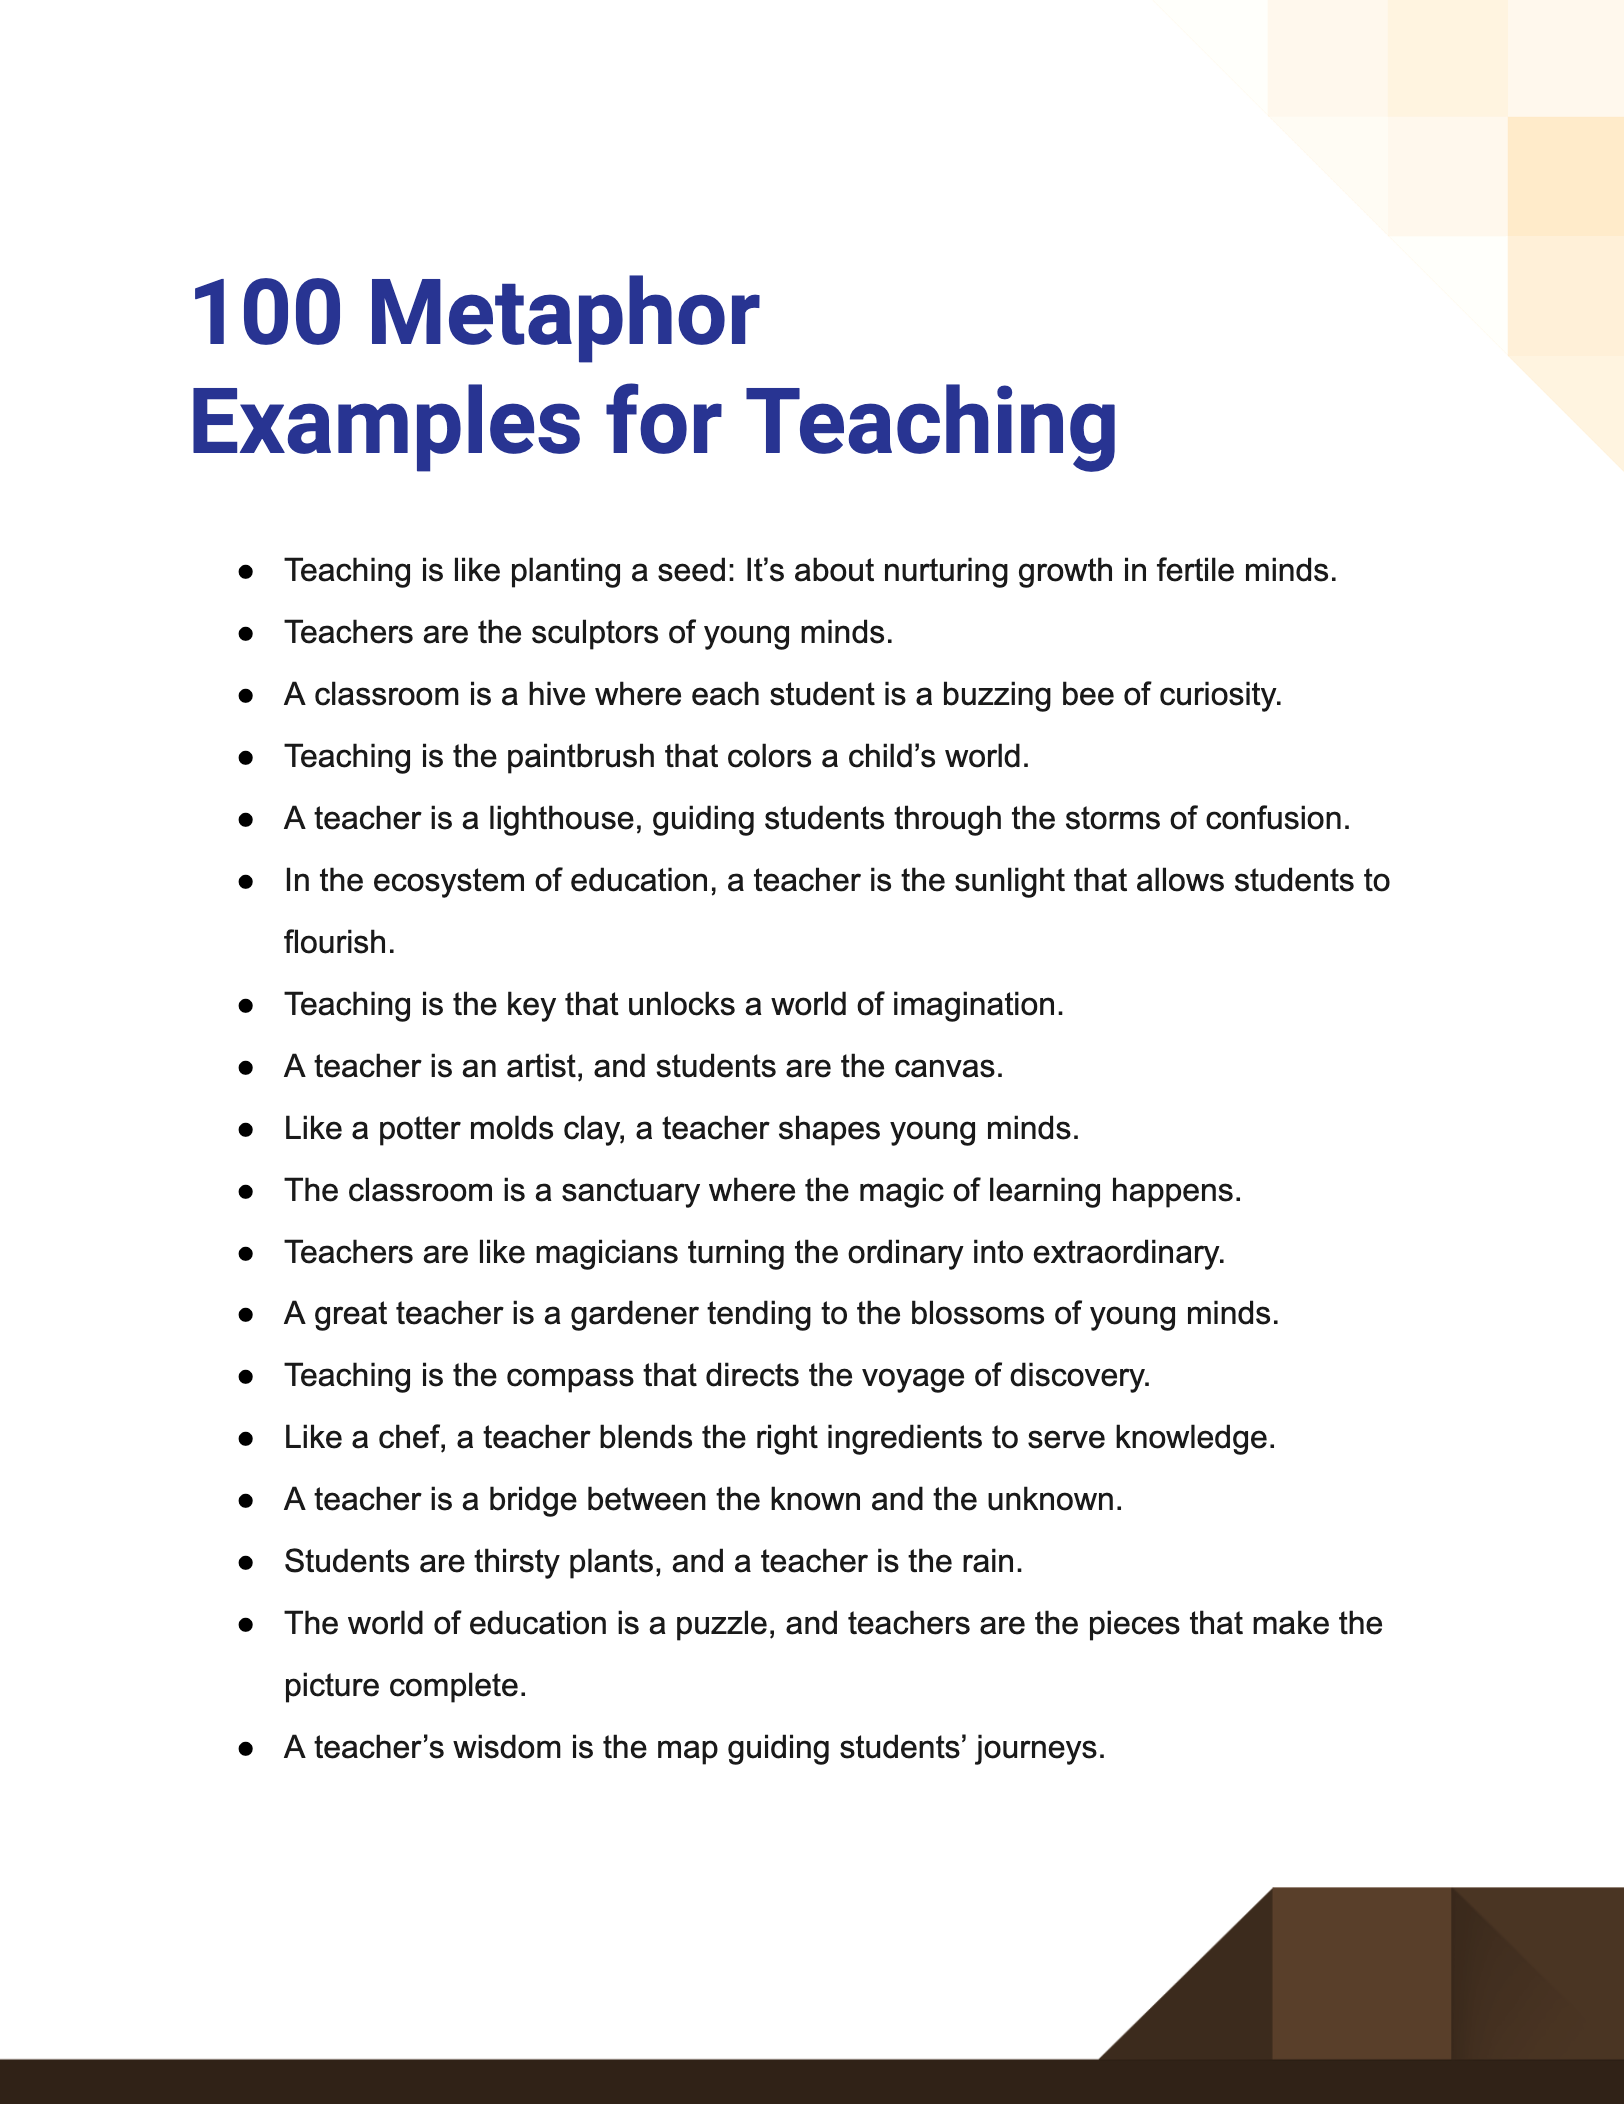 metaphors for teaching examples